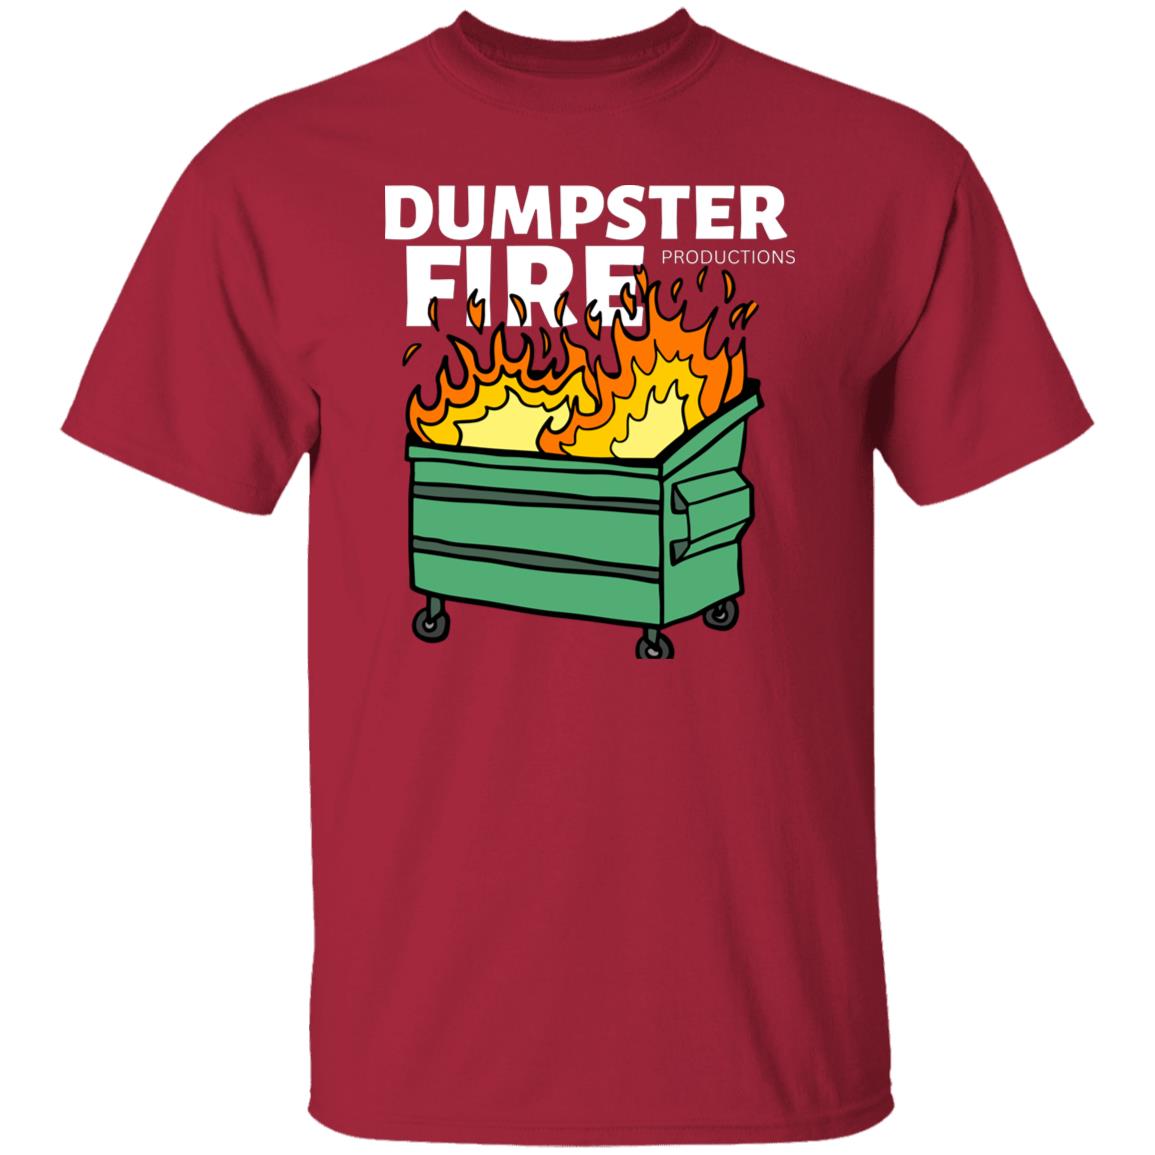 Dumpster Fire Productions Skate Company T-Shirt Skateboarding shirt